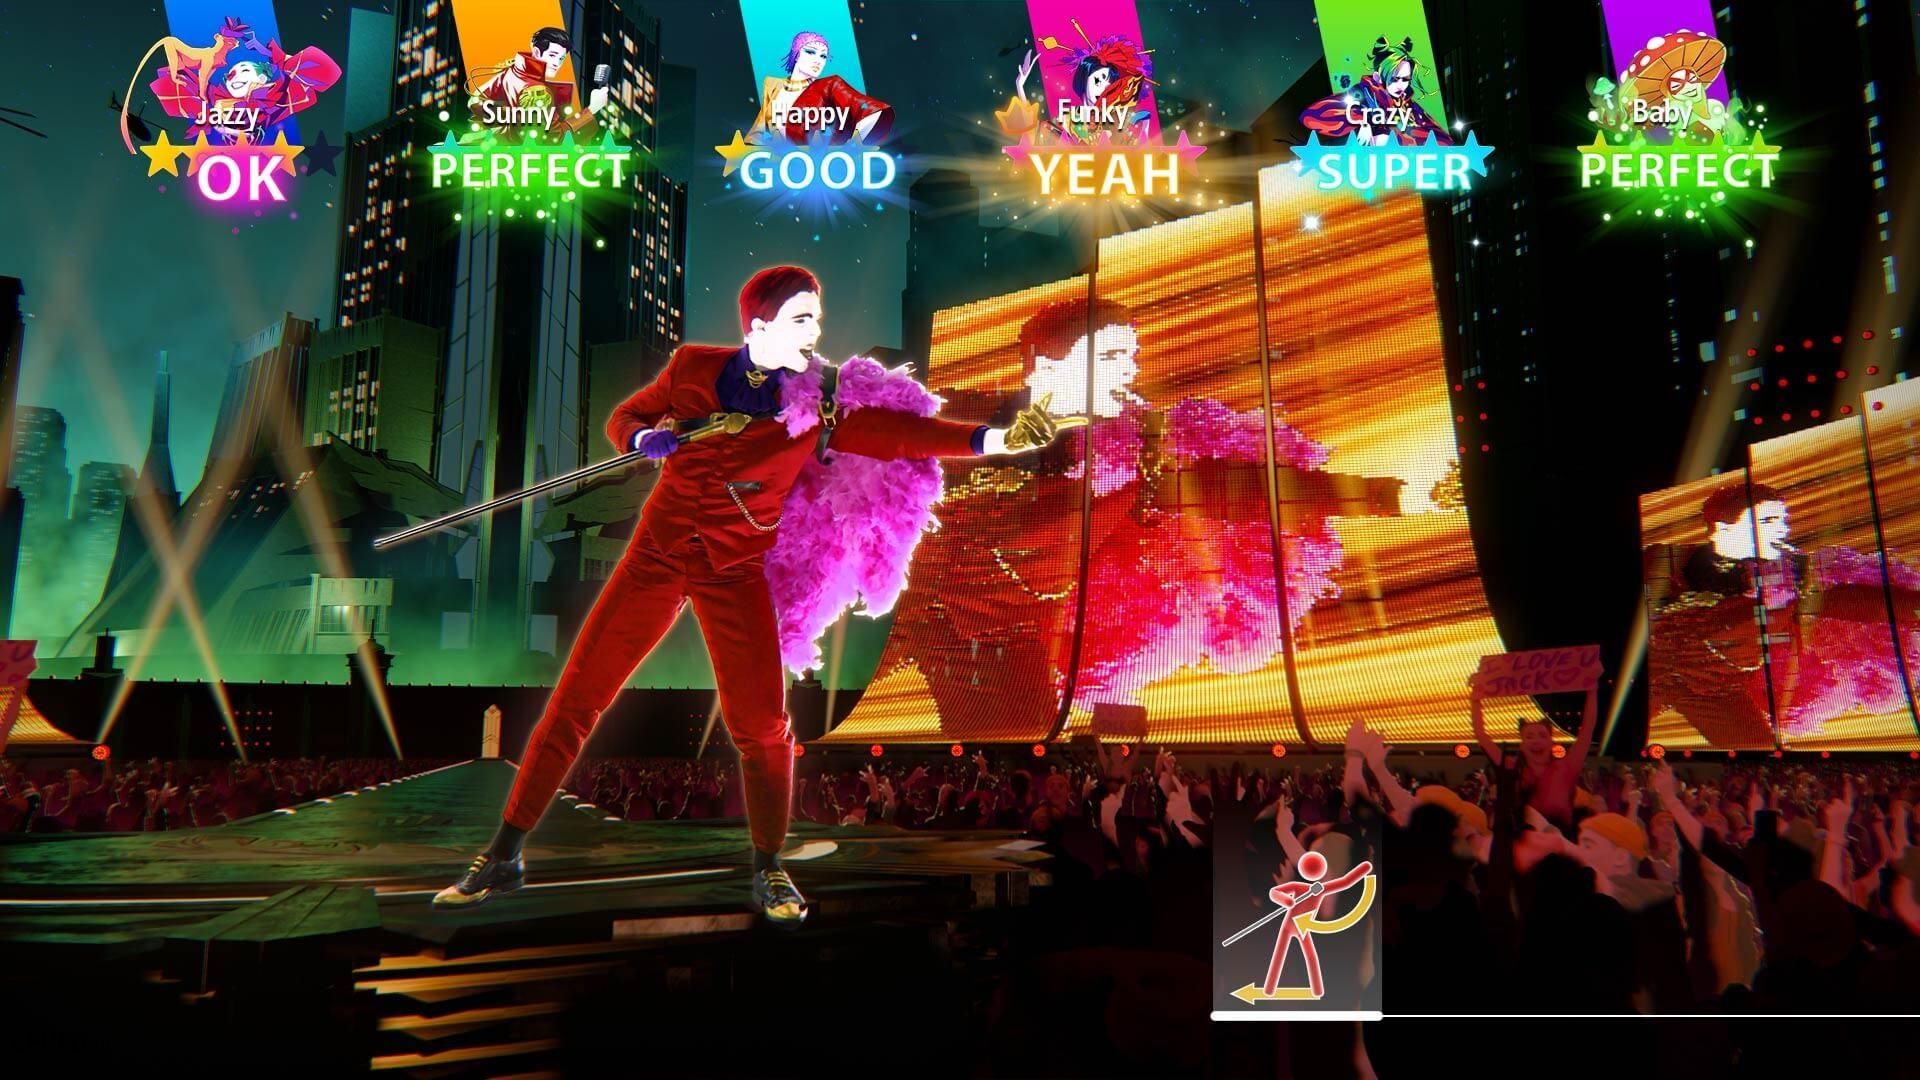 Just Dance 2023 (Gra Xbox Series X)